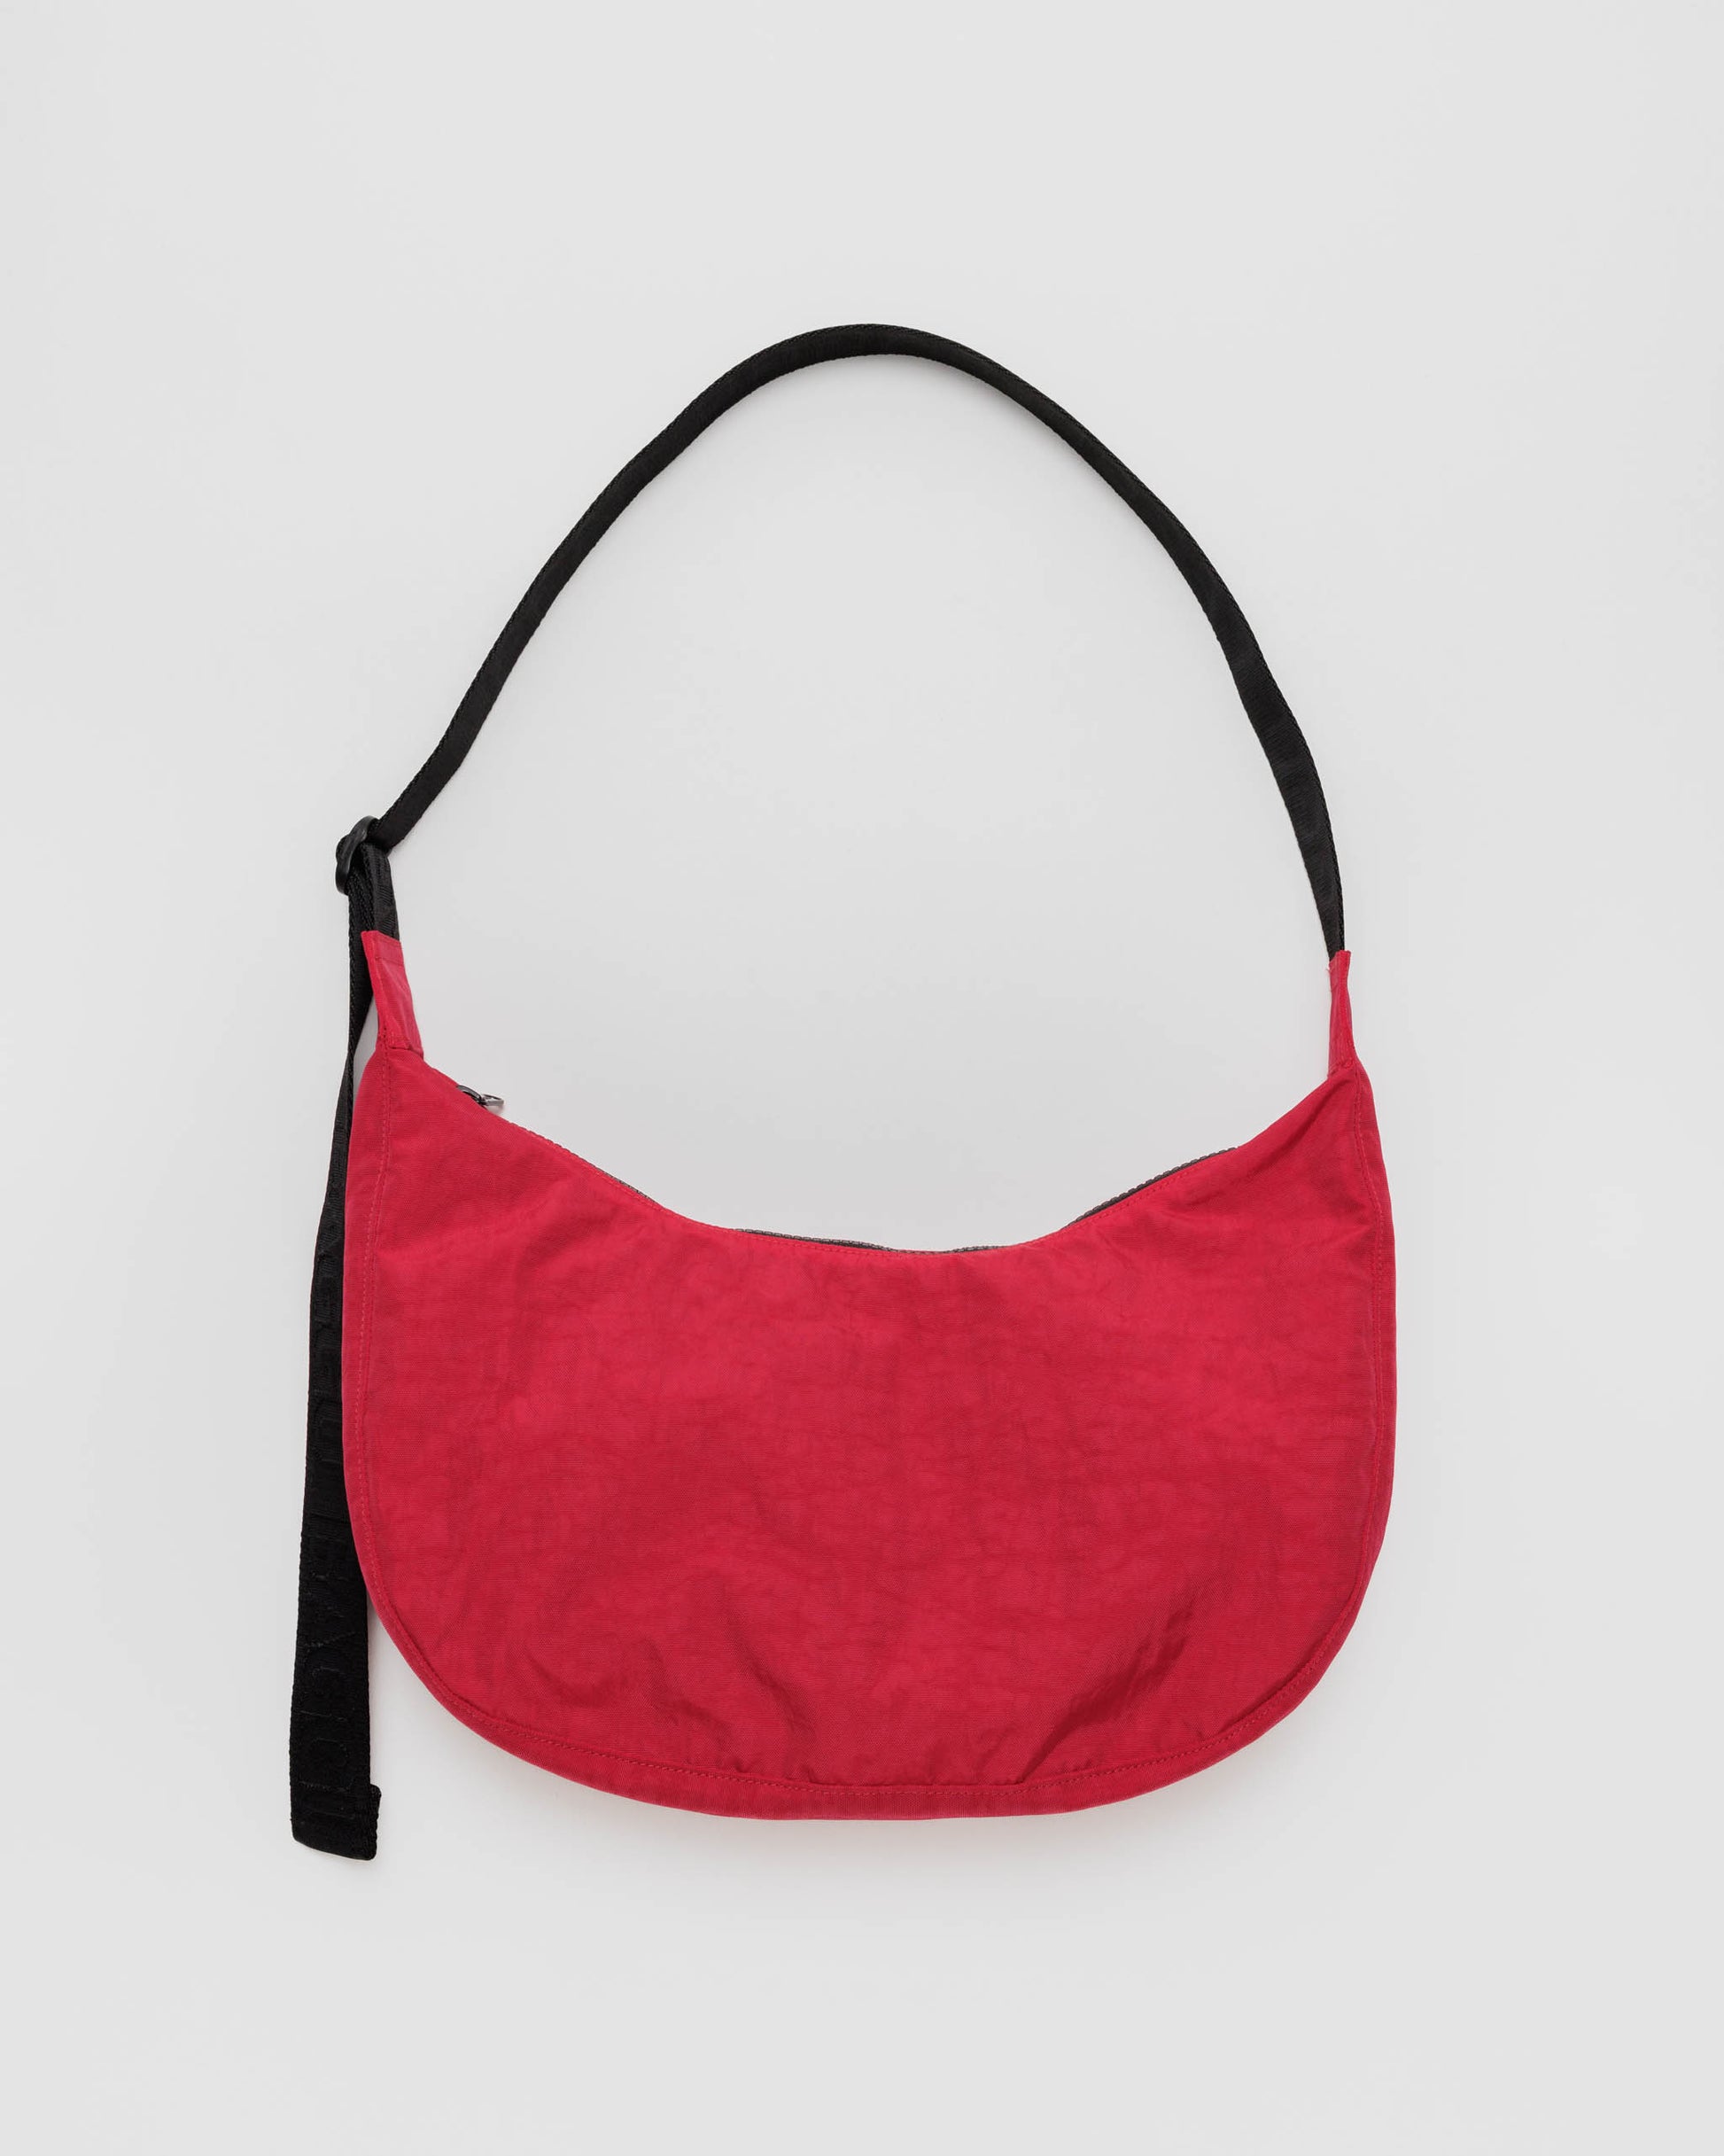 BAGGU Medium Nylon Crescent bag in candy apple red